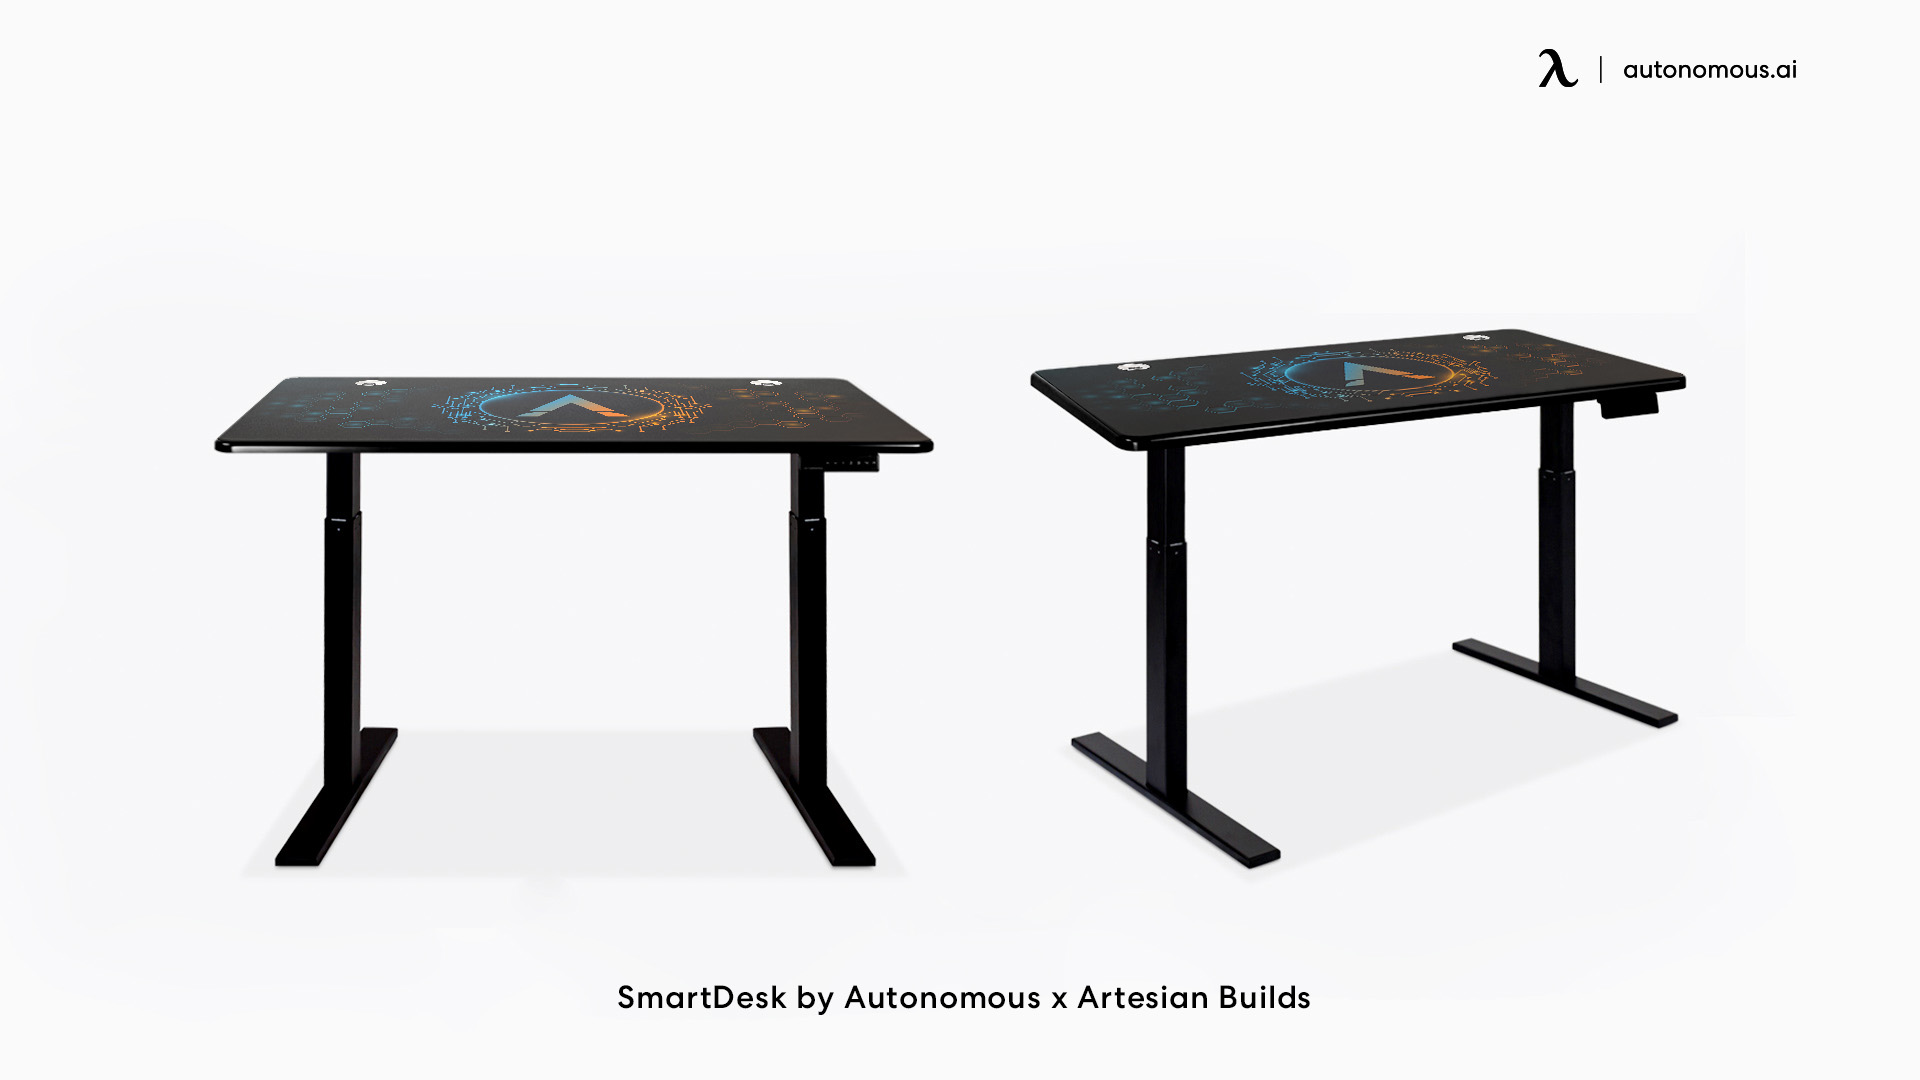 SmartDesk by Autonomous x Artesian Builds